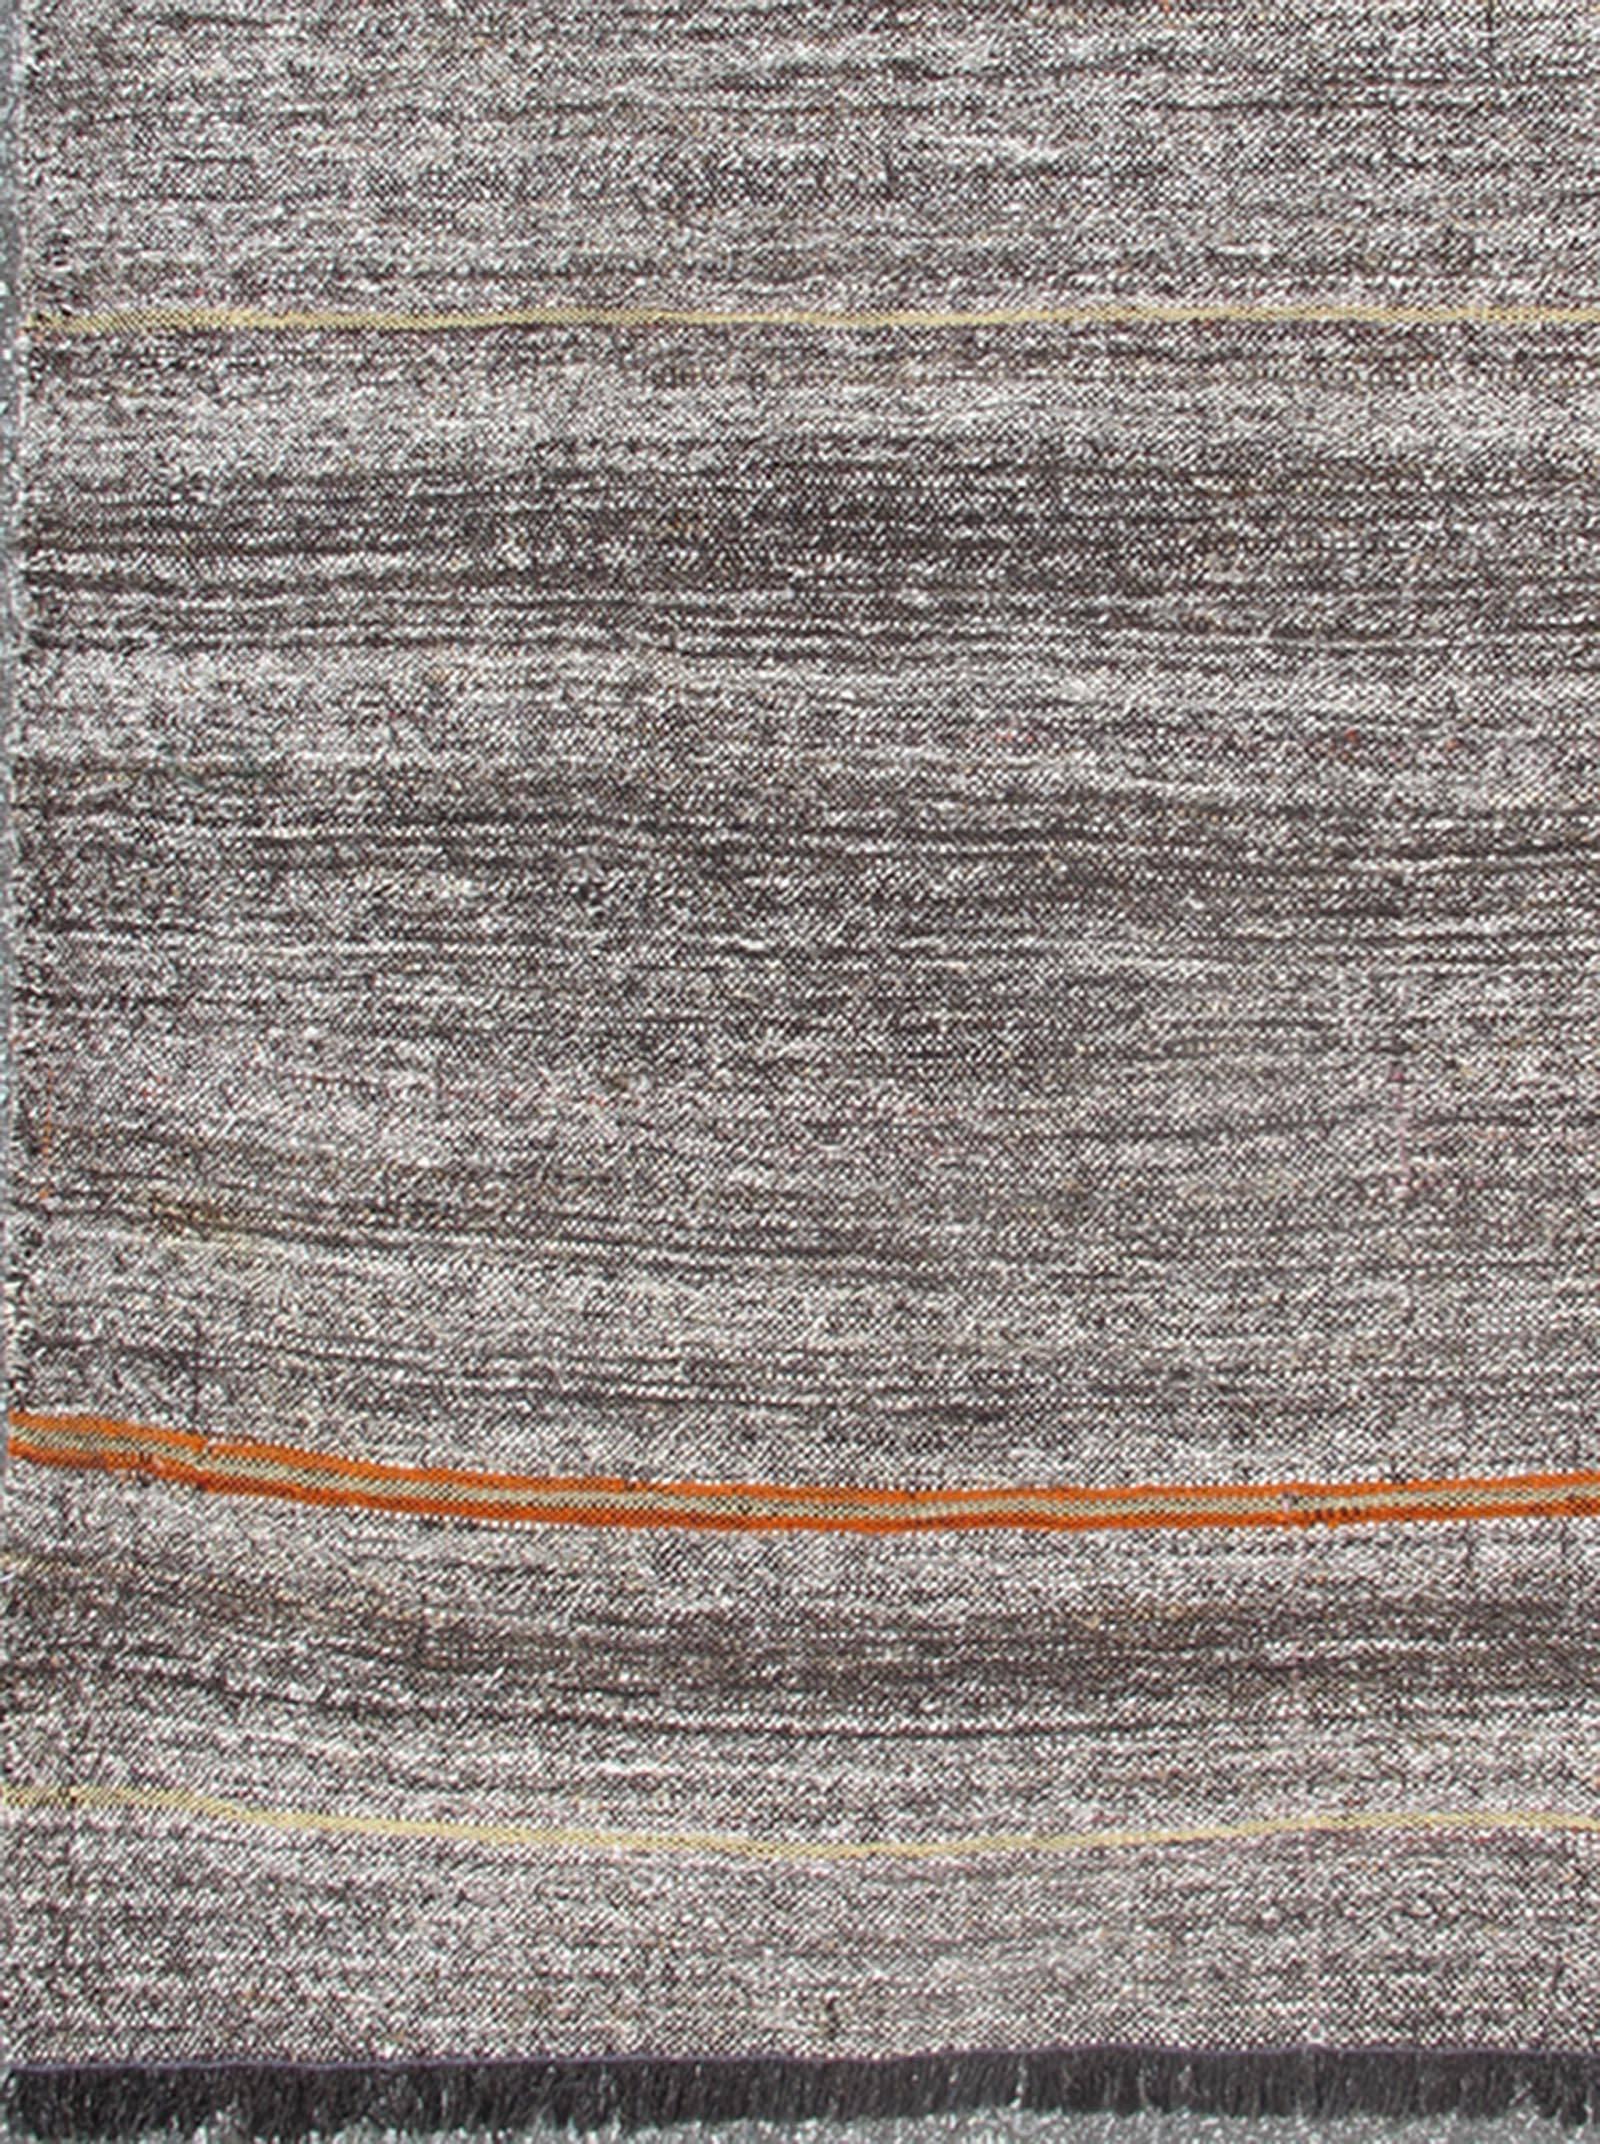 Vintage Turkish Kilim rug with variegated stripes in charcoal, gray and orange, Keivan Woven Arts/ rug TU-NED-136025, country of origin / type: Turkey / Kilim, circa mid-20th century

Measures: 6'3 x 9'2.

This vintage tribal Turkish Kilim carpet is